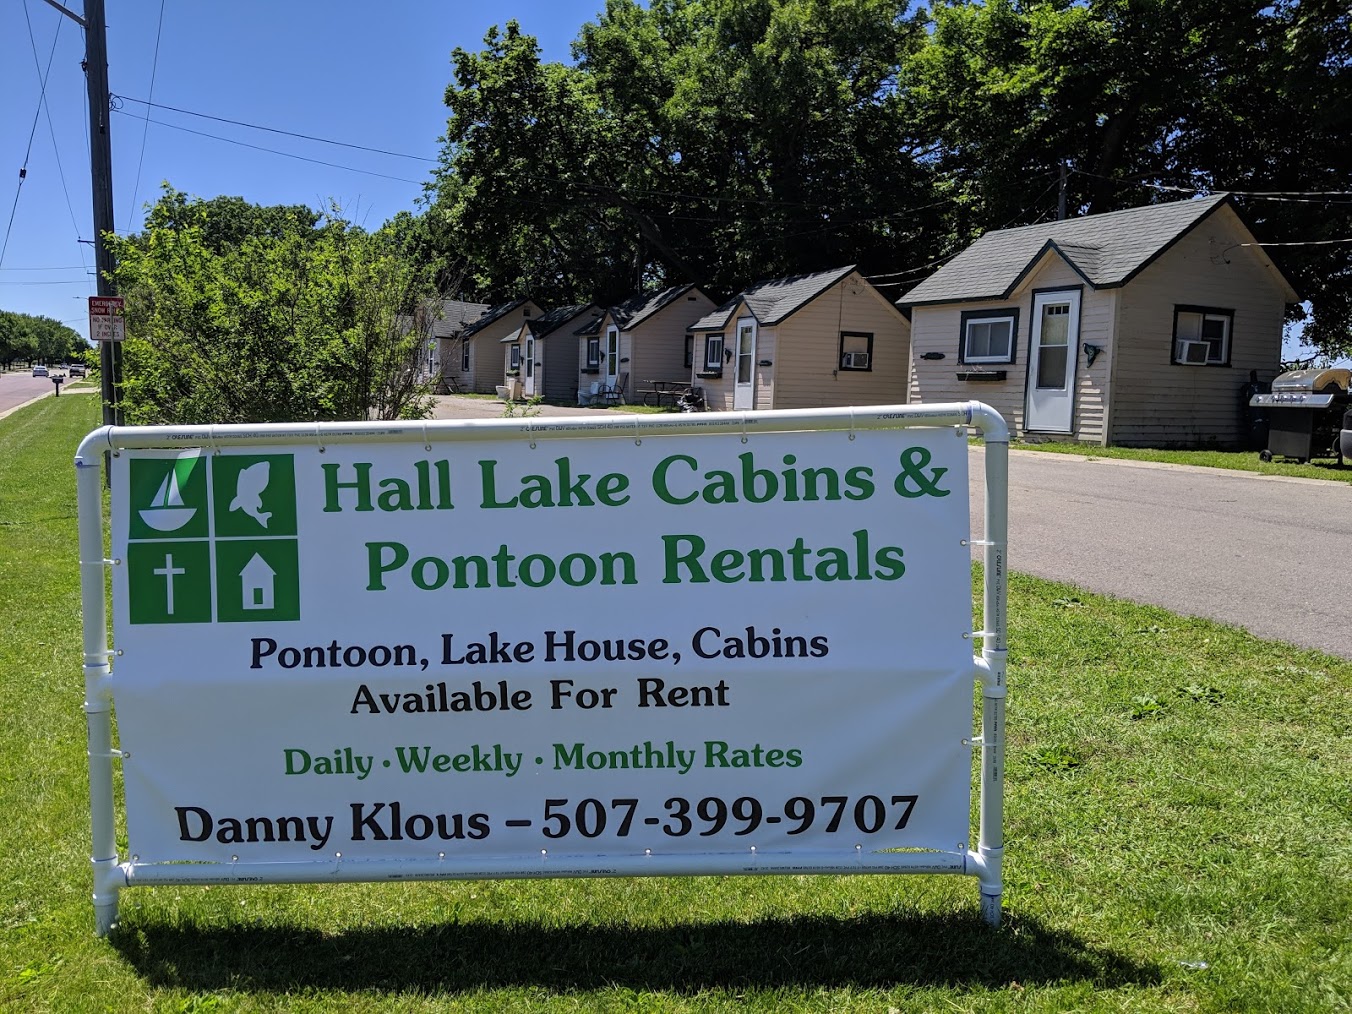 Hall Lake Cabins & Pontoon Rentals